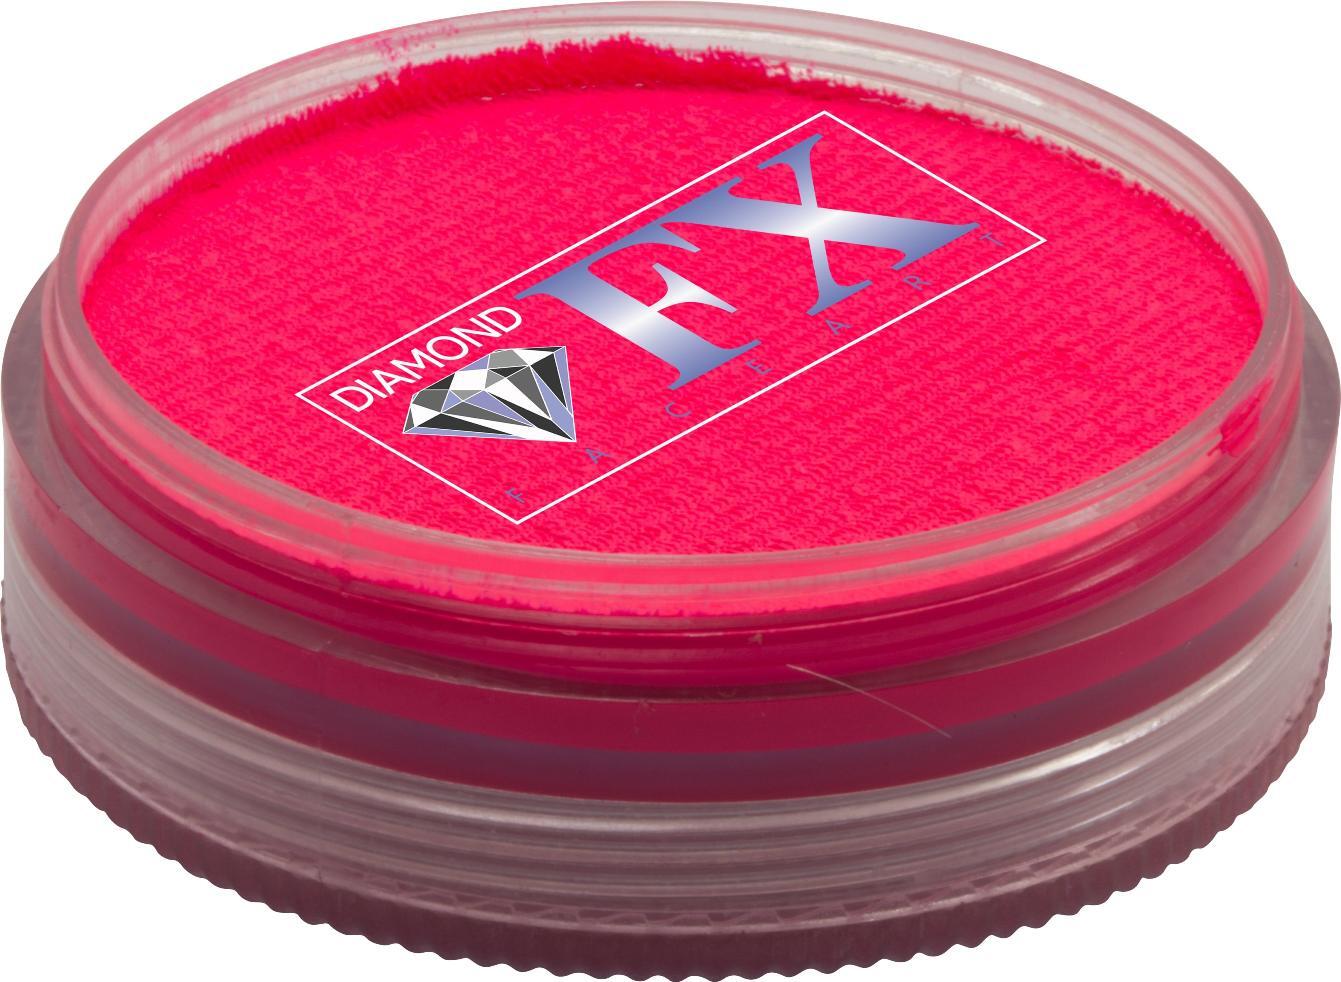 Diamond FX Pink Neon 45g - Small Image